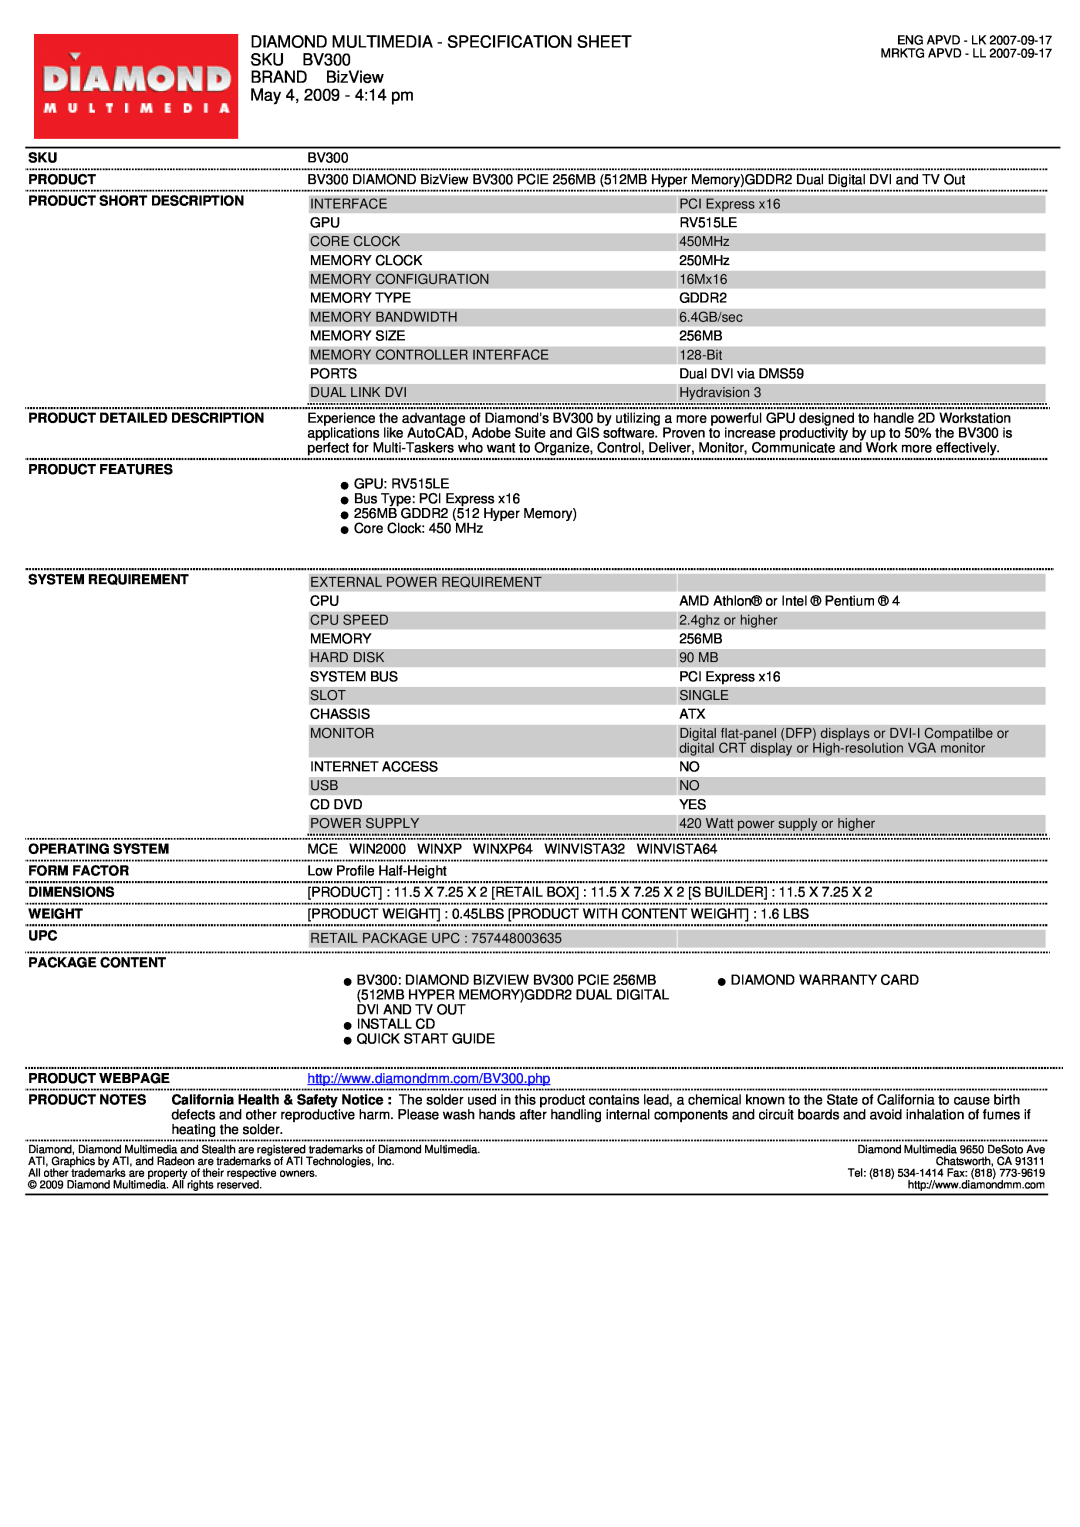 Diamond Multimedia BV300 PCIE specifications Diamond Multimedia - Specification Sheet, BRAND BizView, May 4, 2009 - 414 pm 